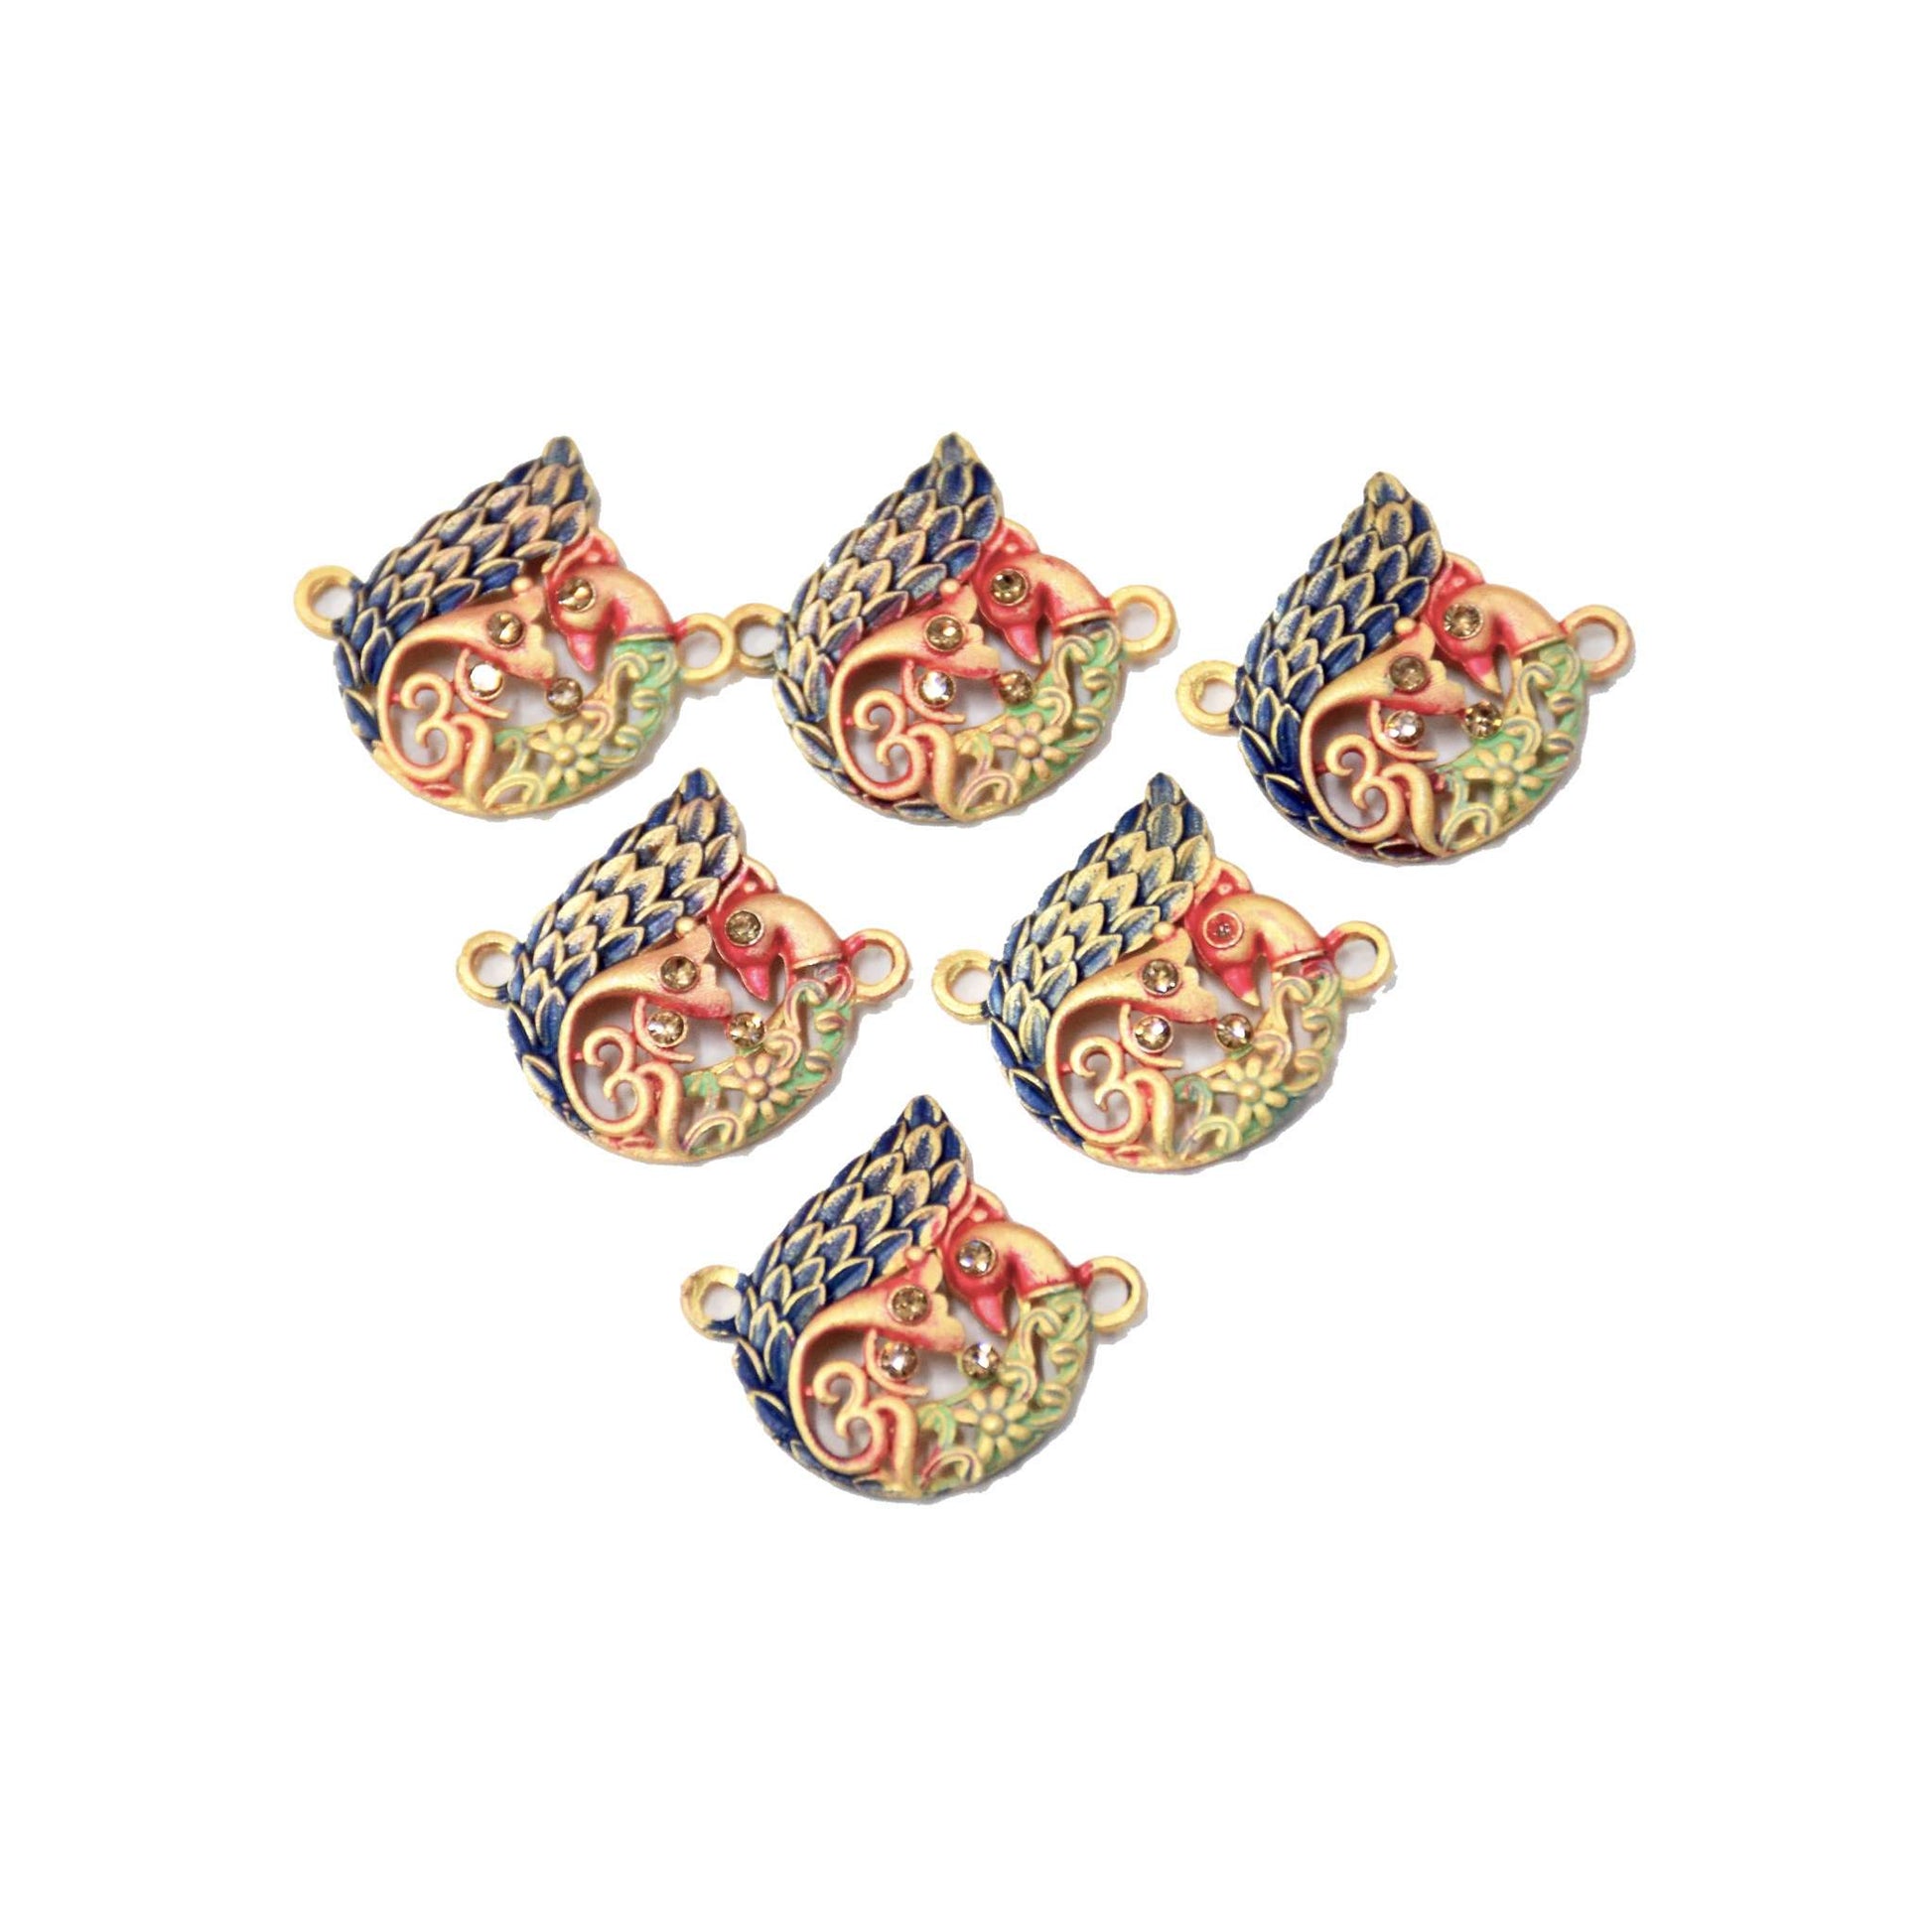 Indian Petals Peacock Style Metal Mazak Motif Pendant for Rakhi, Jewelry designing and Craft Making or Decor